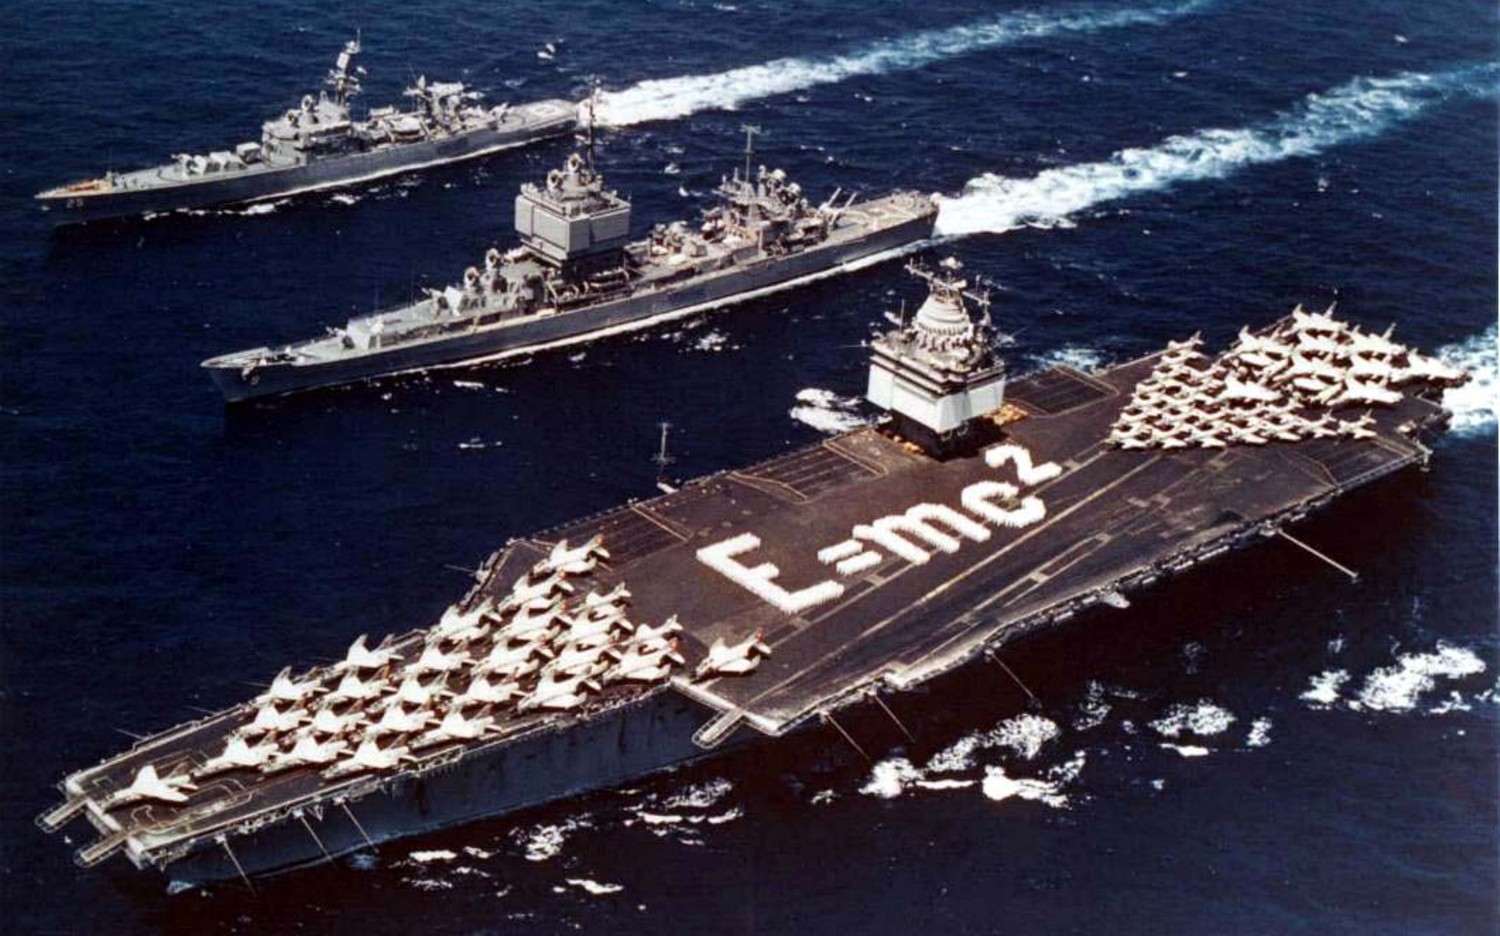 Lost in Action Plaque USS Enterprise (CV-6) 1942